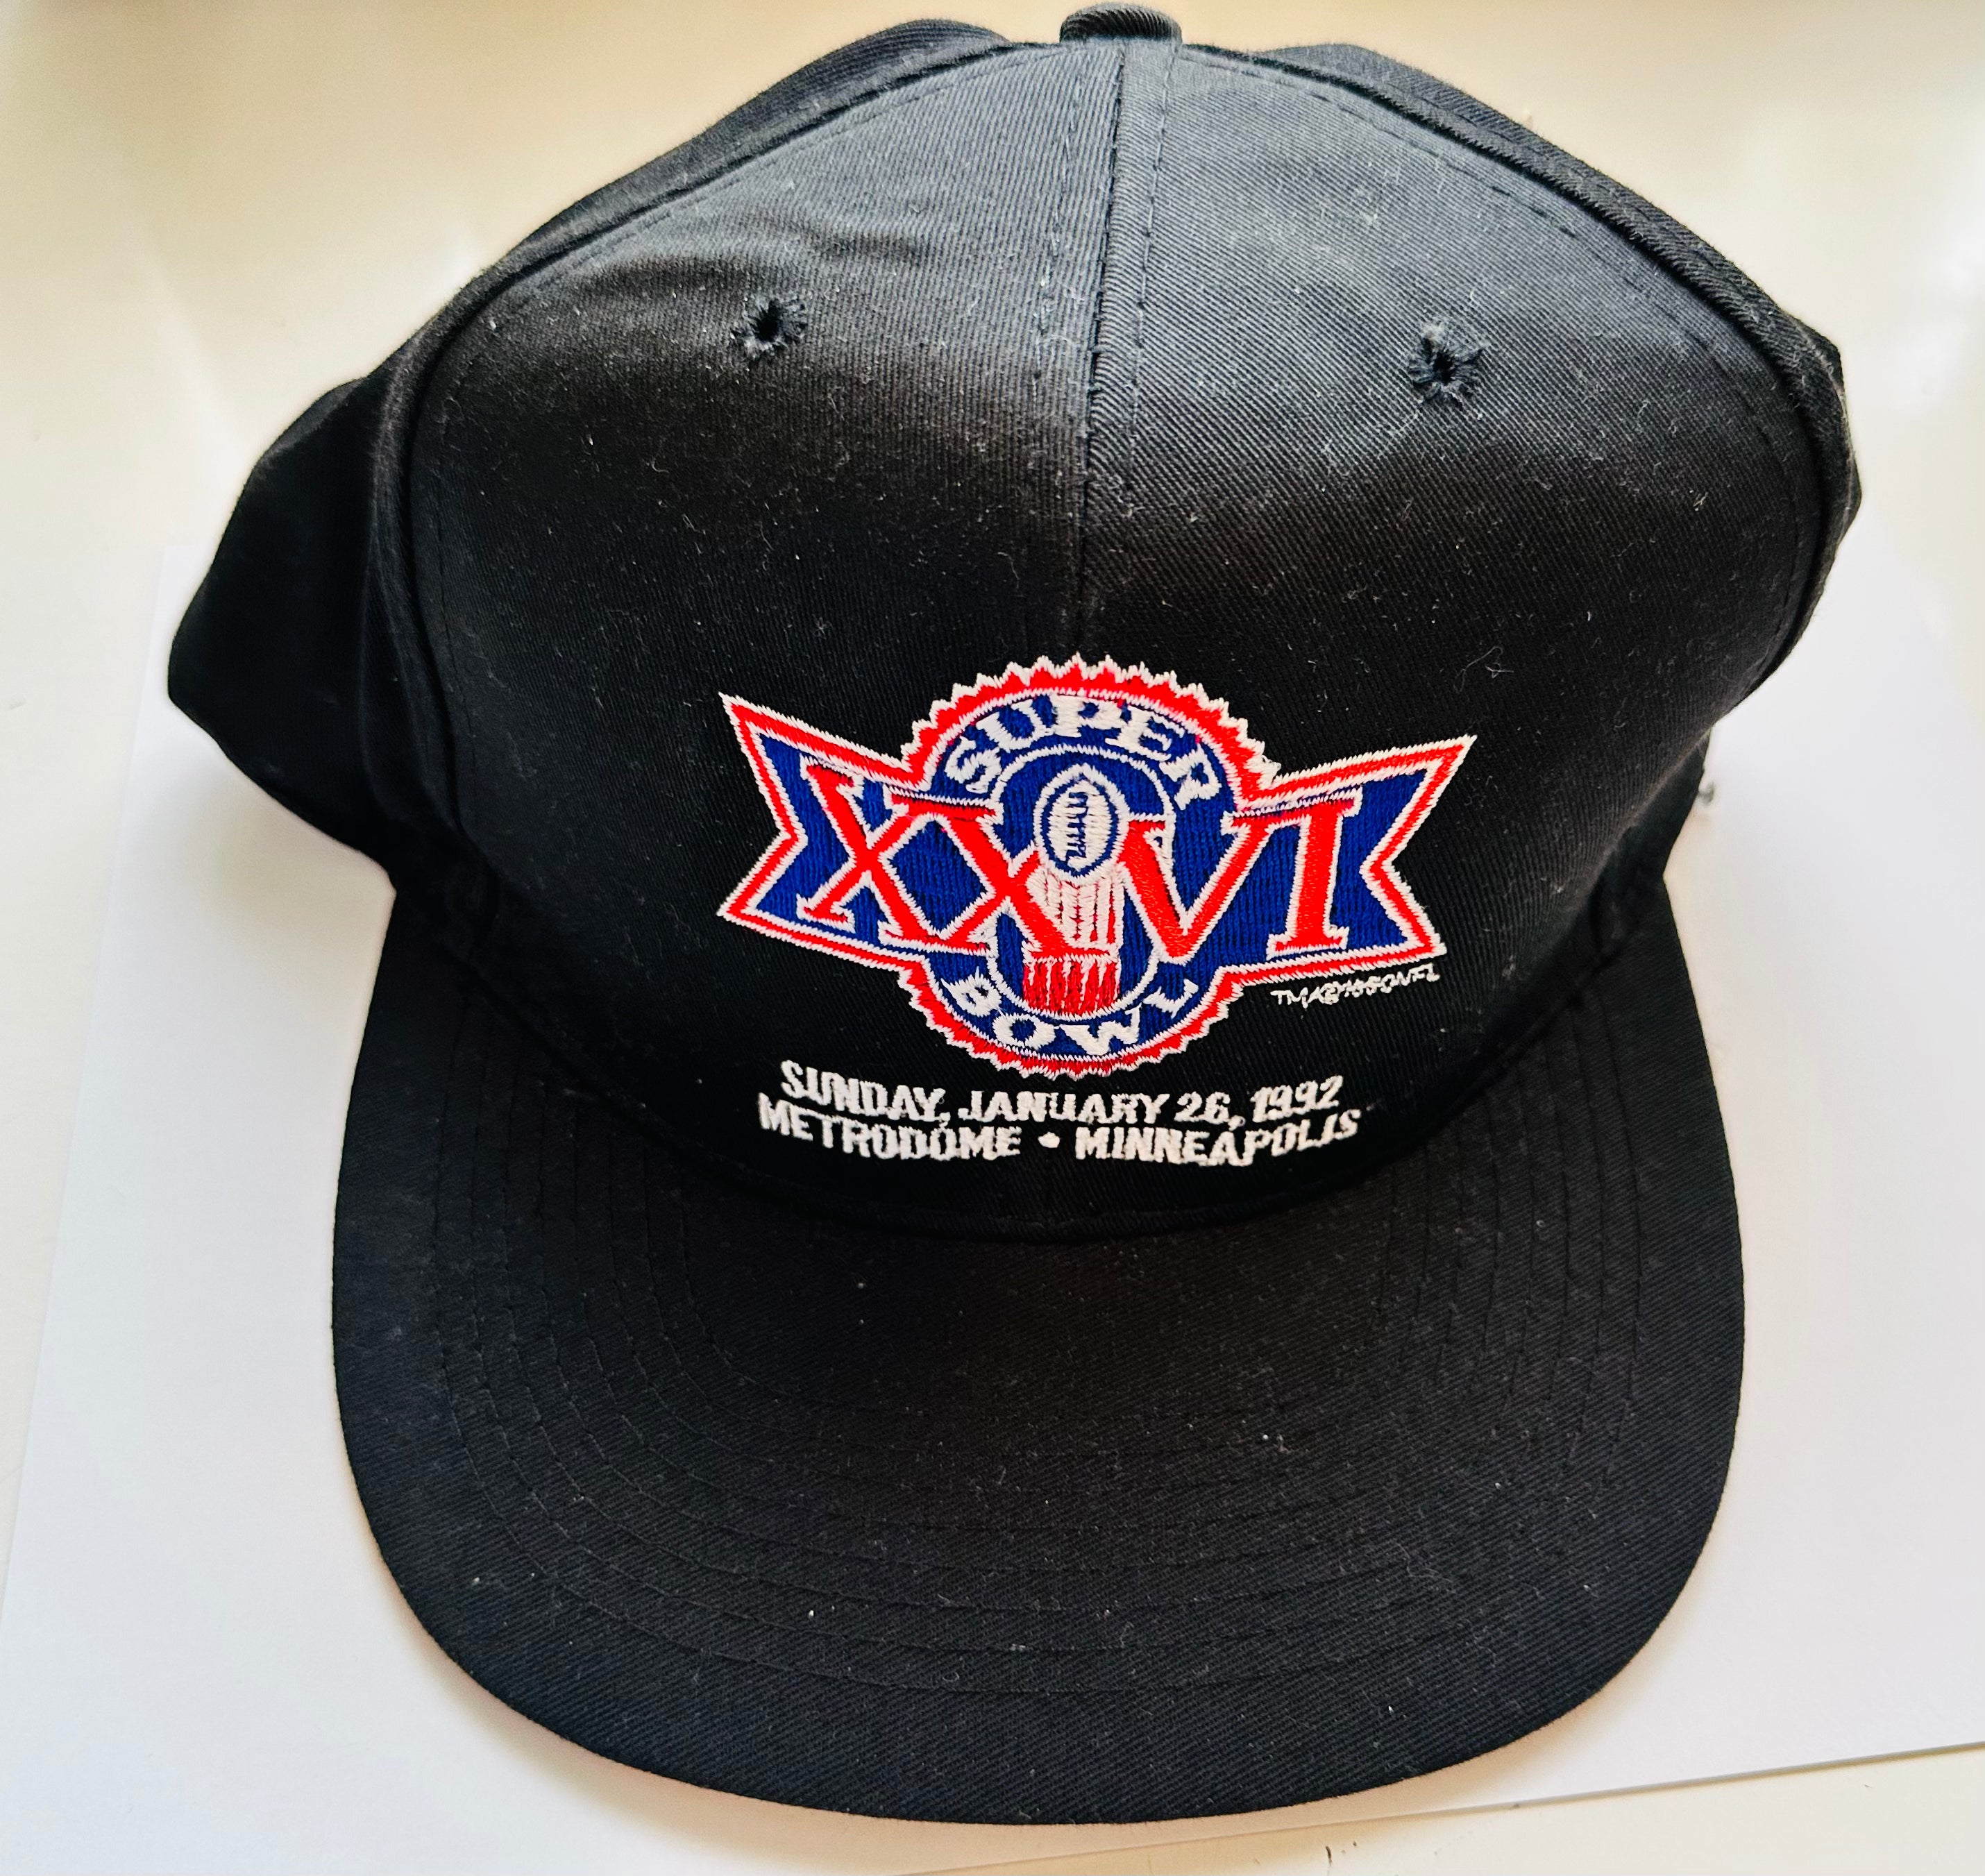 Super Bowl XXV1 vintage football snap back hat